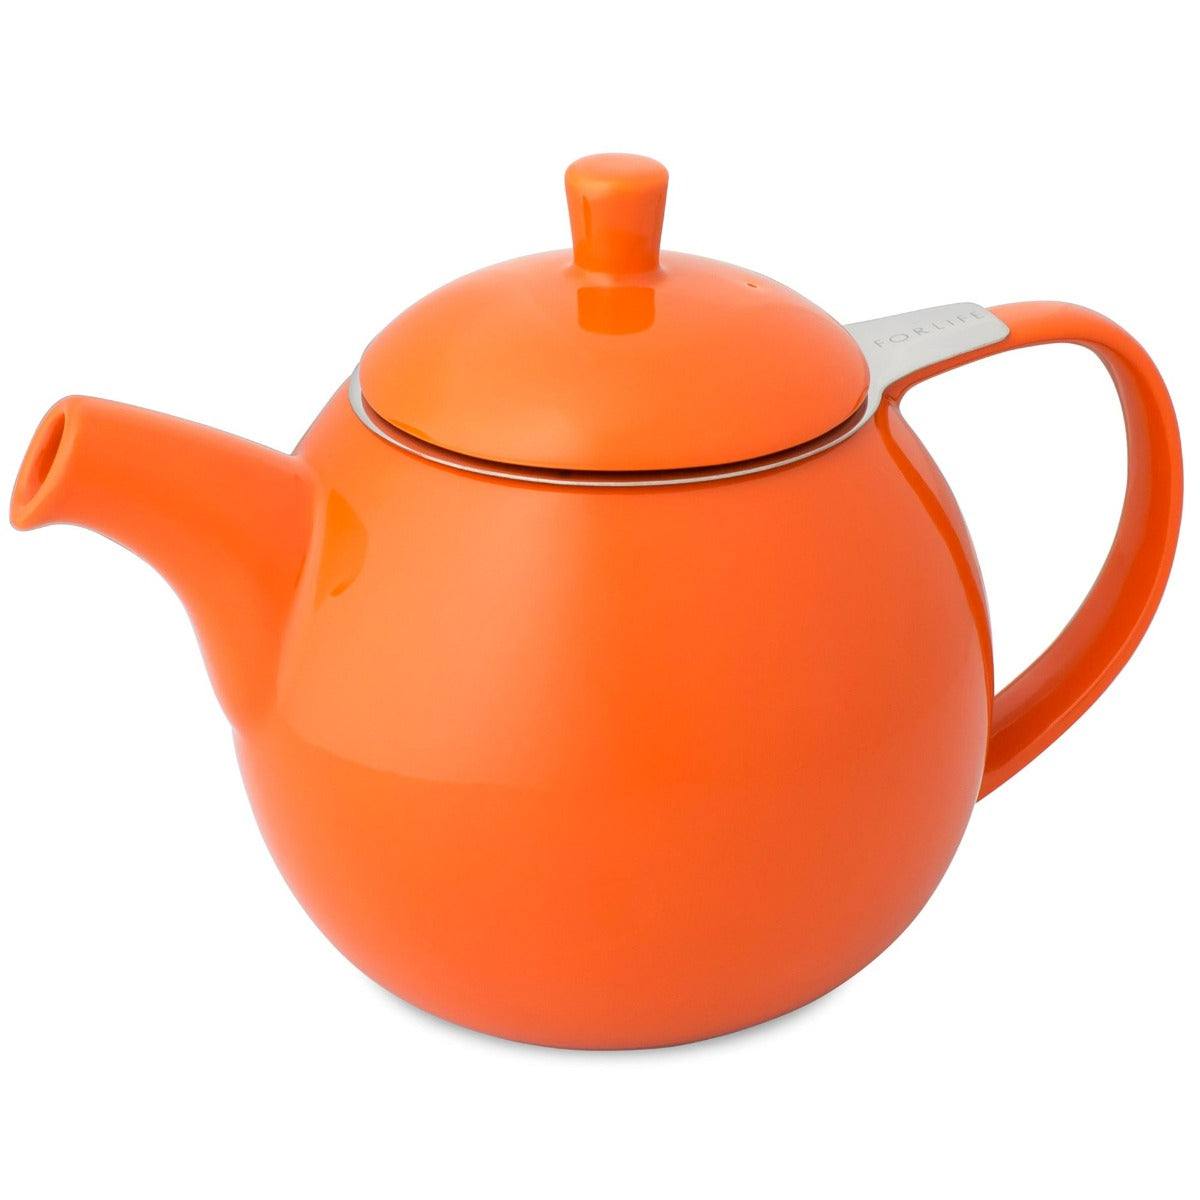 Curve teapot - Carrot